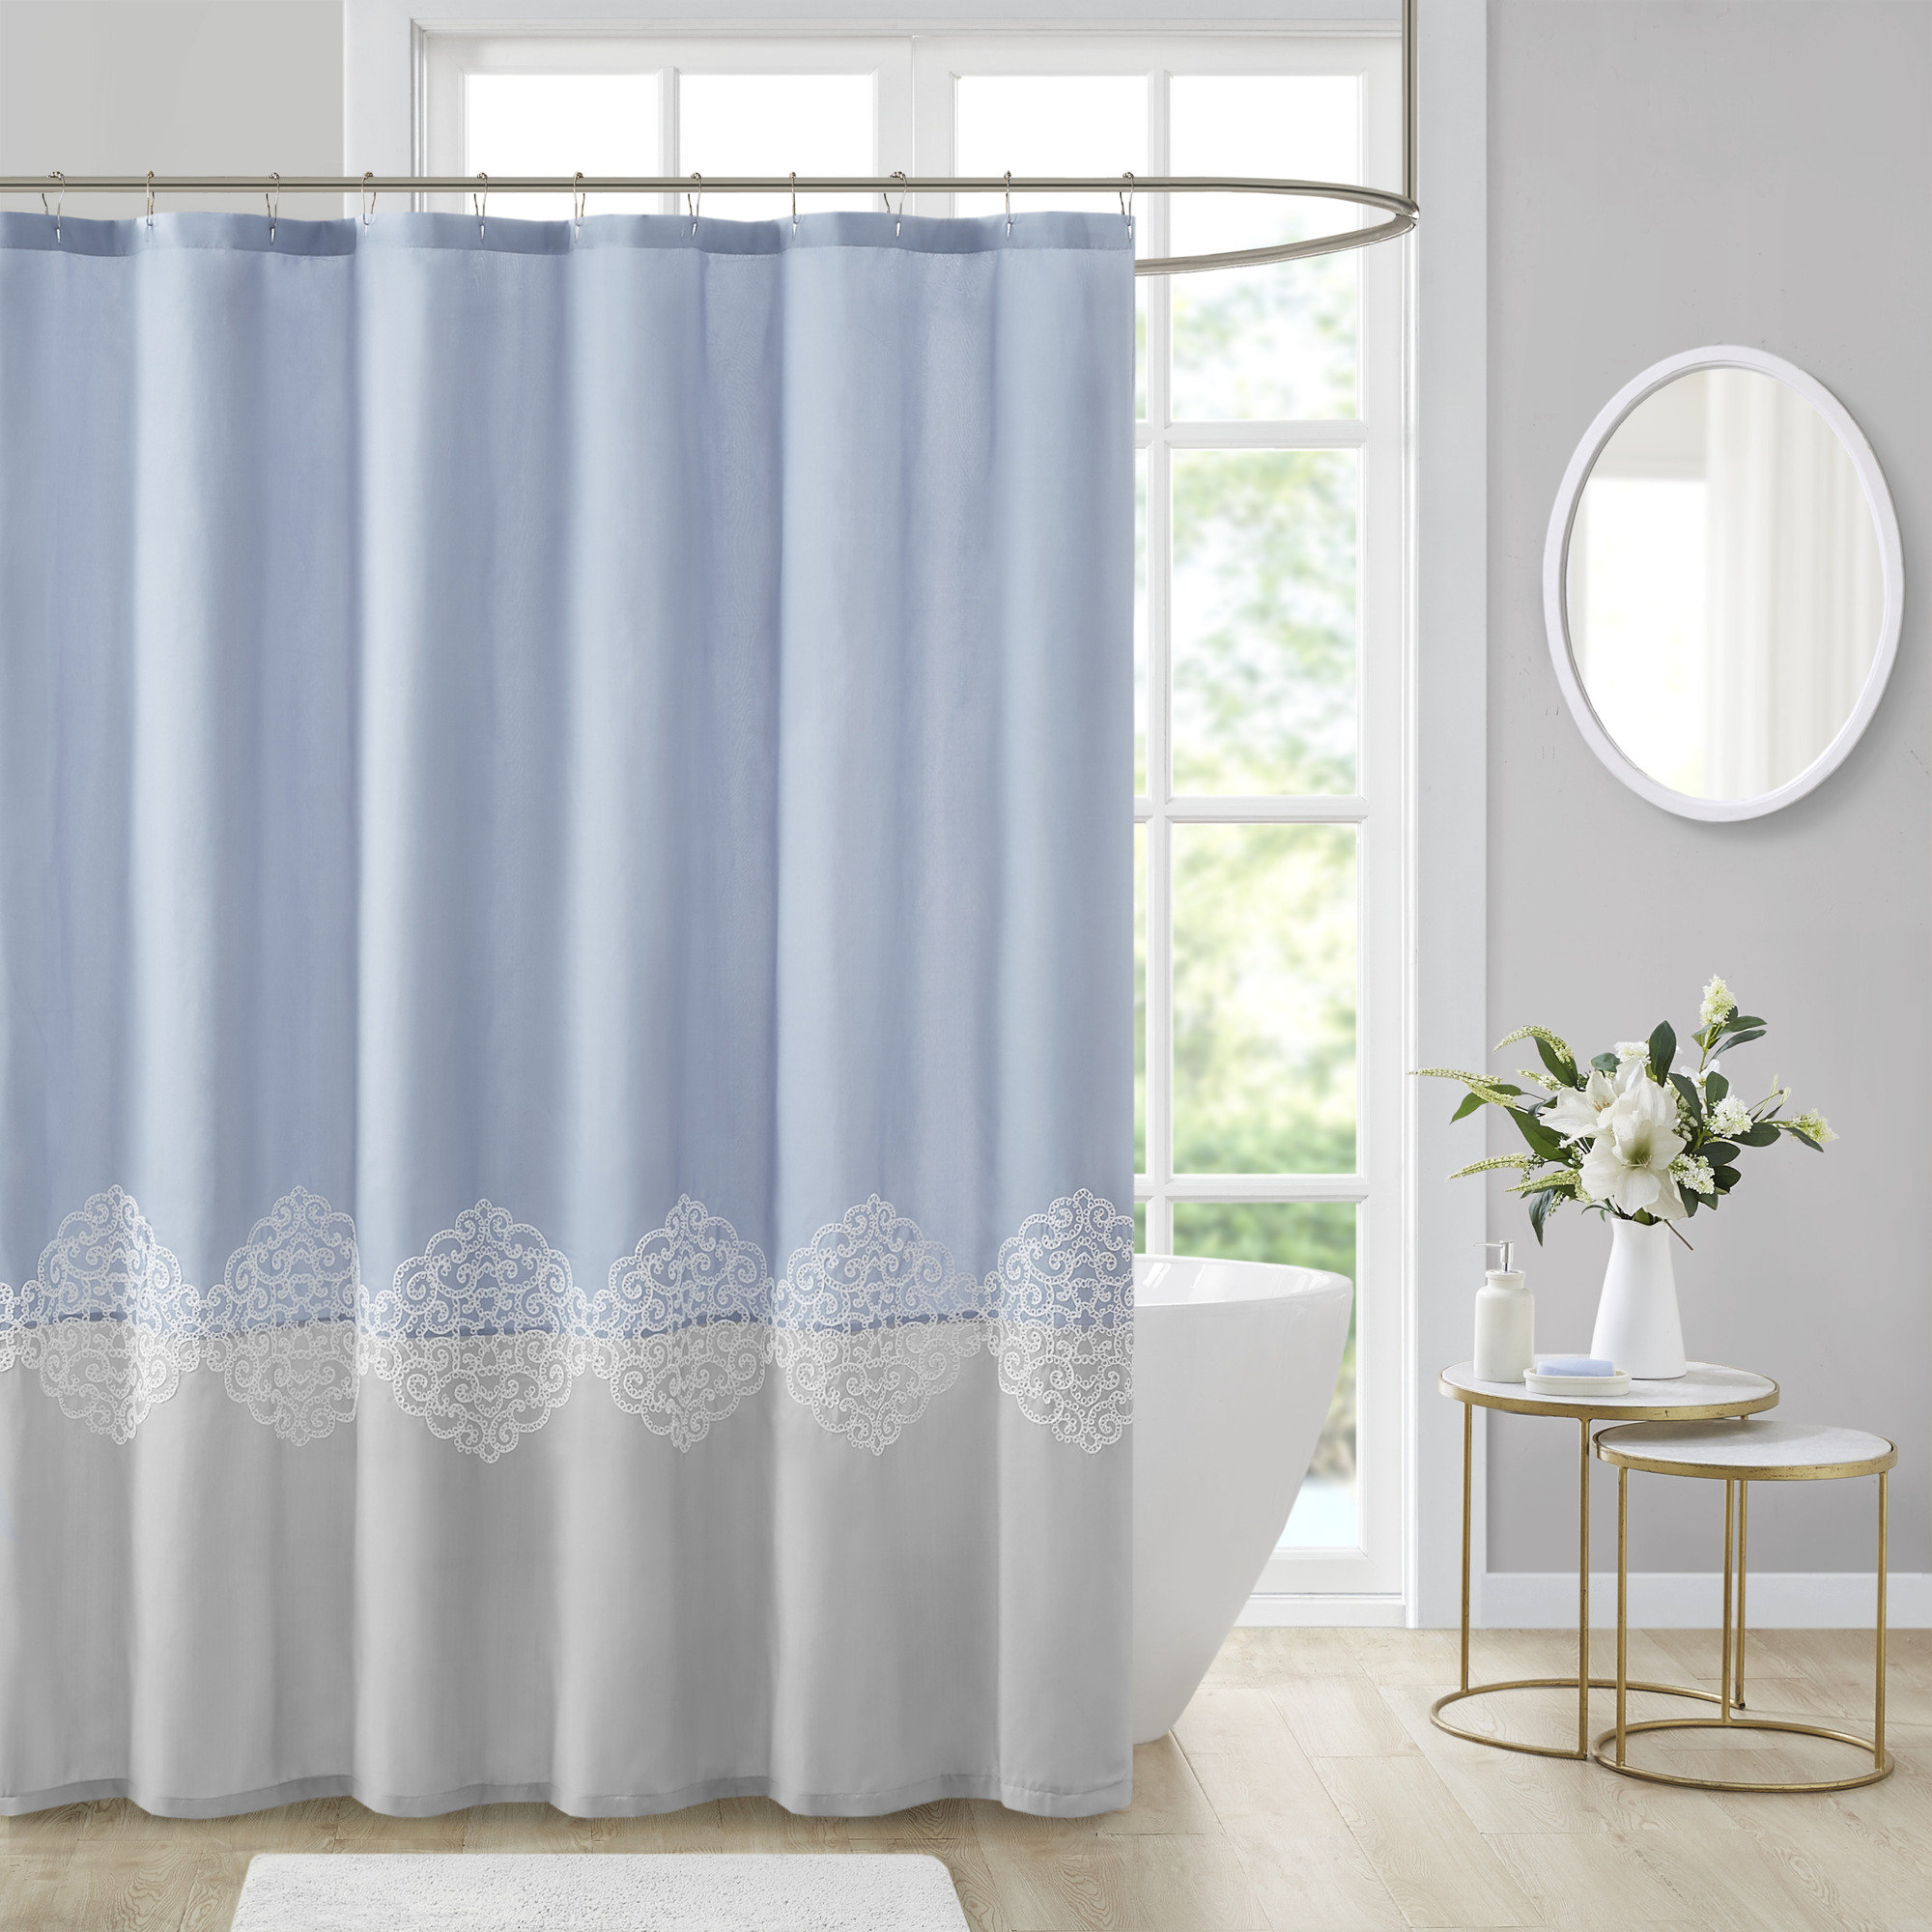 Blue Colorblock Striped Shower Curtain